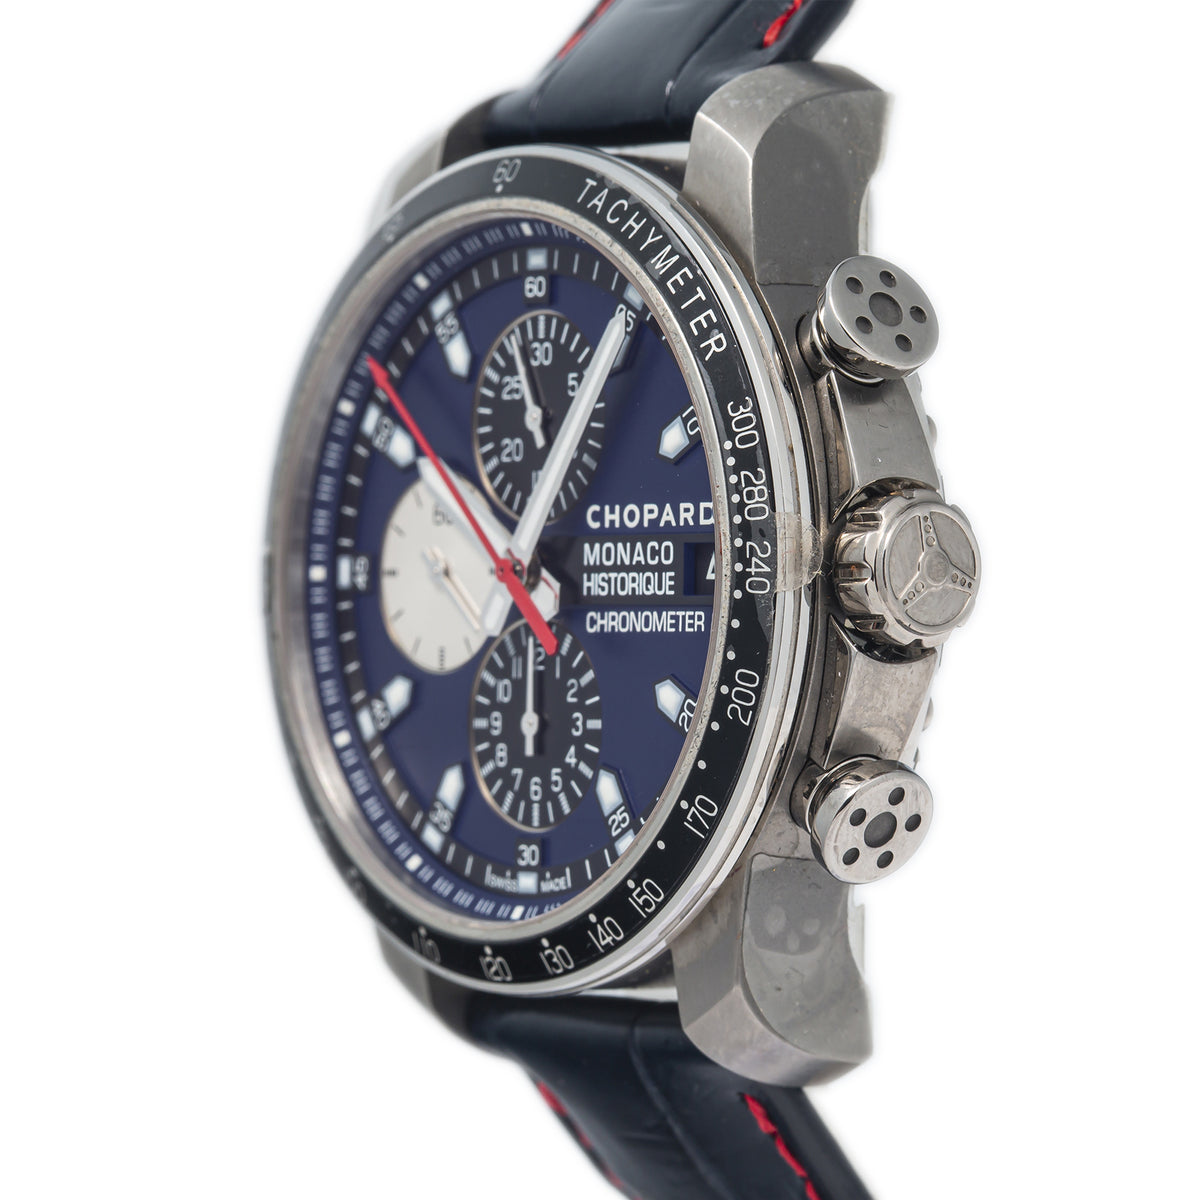 Chopard Monaco Historique 8570 Limited Edition Blue Dial Automatic Watch 45mm